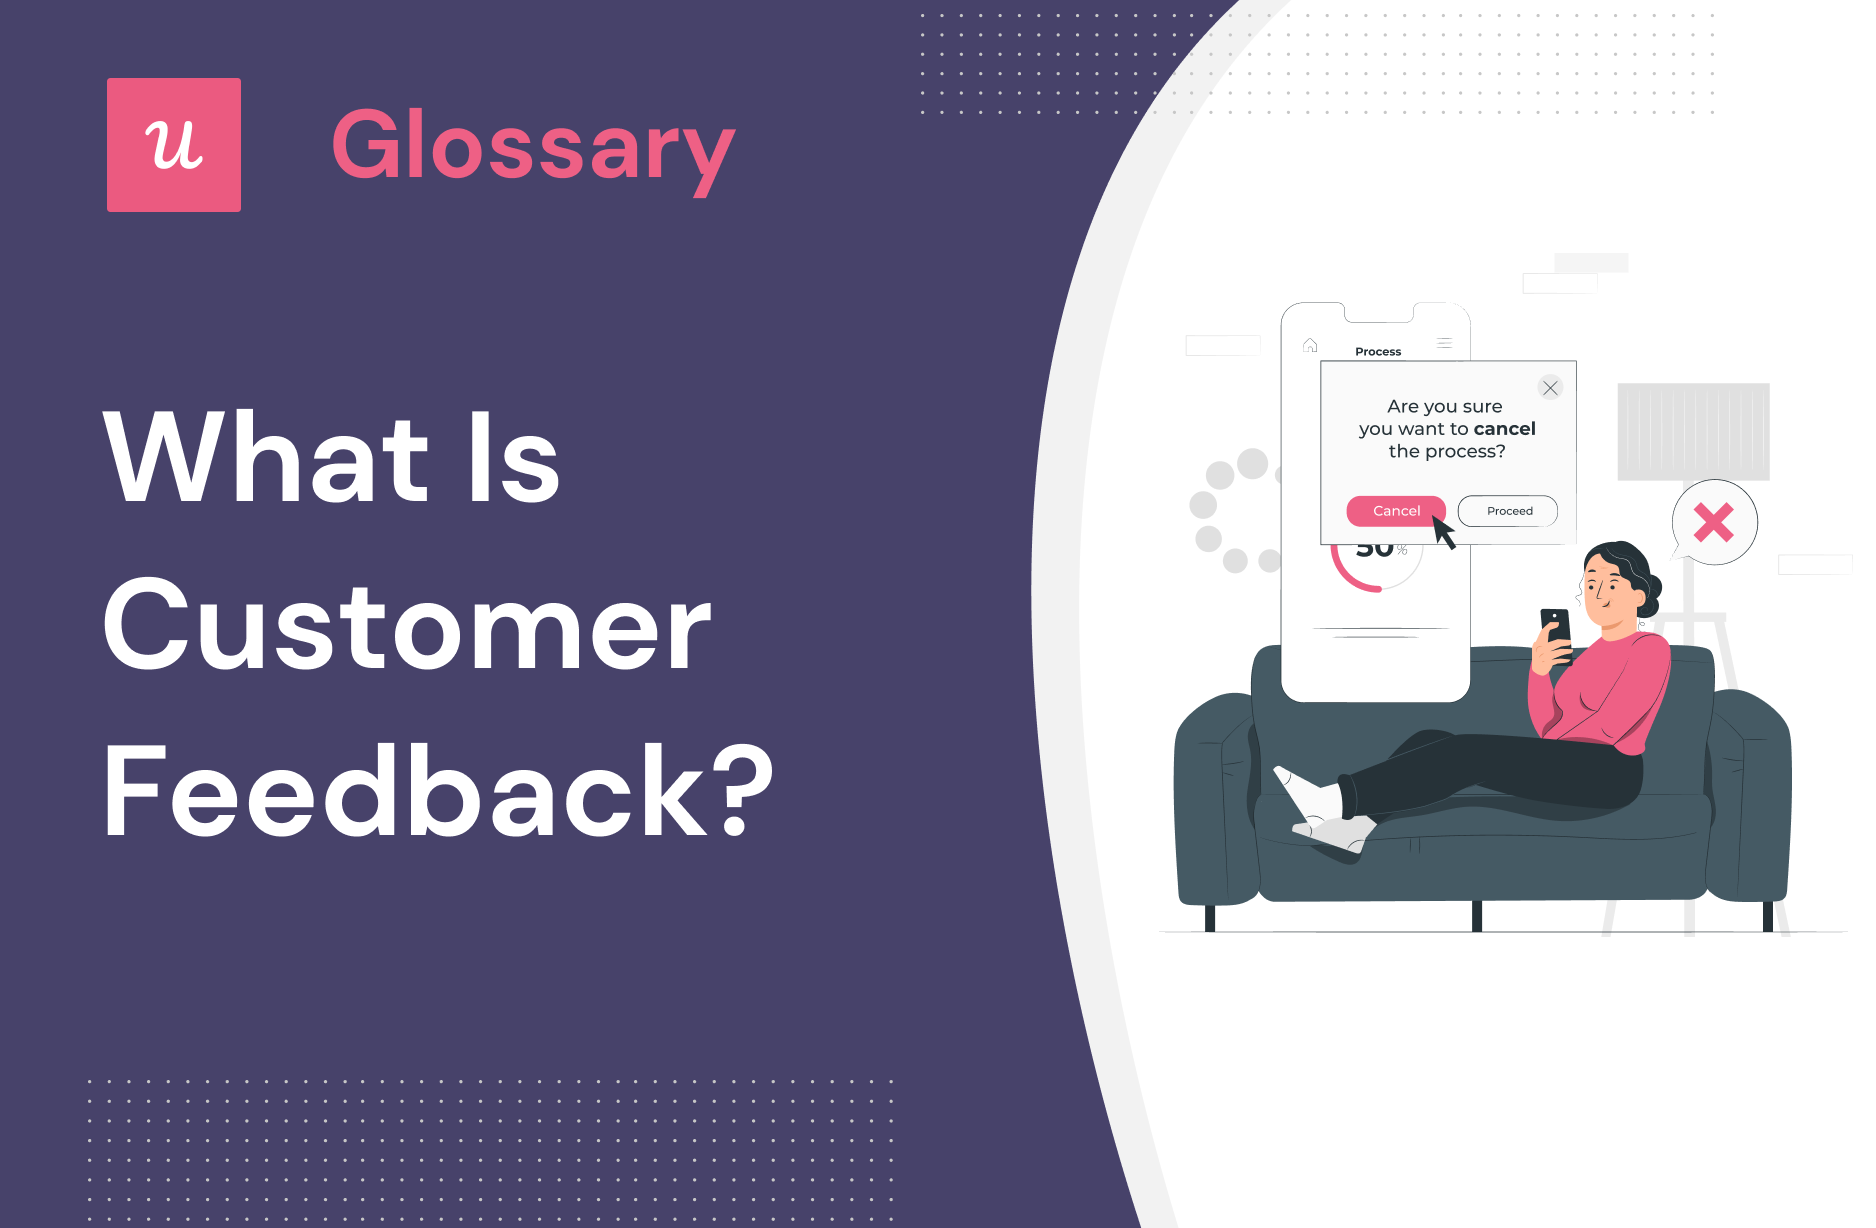 What is Customer Feedback?